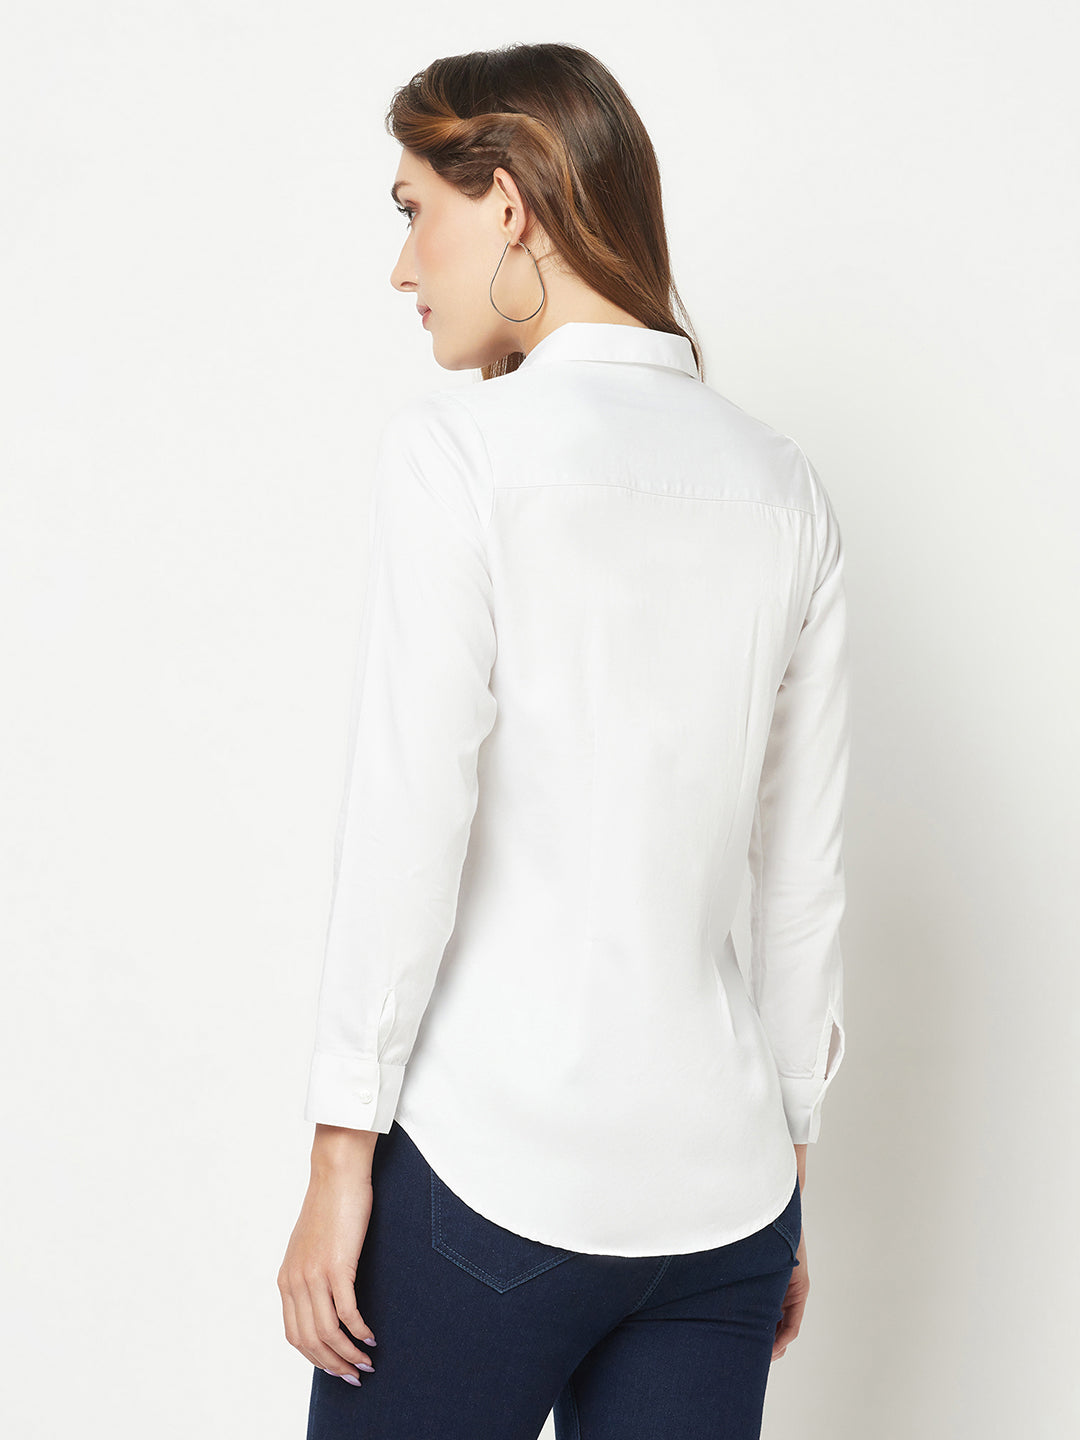  White Formal Shirt